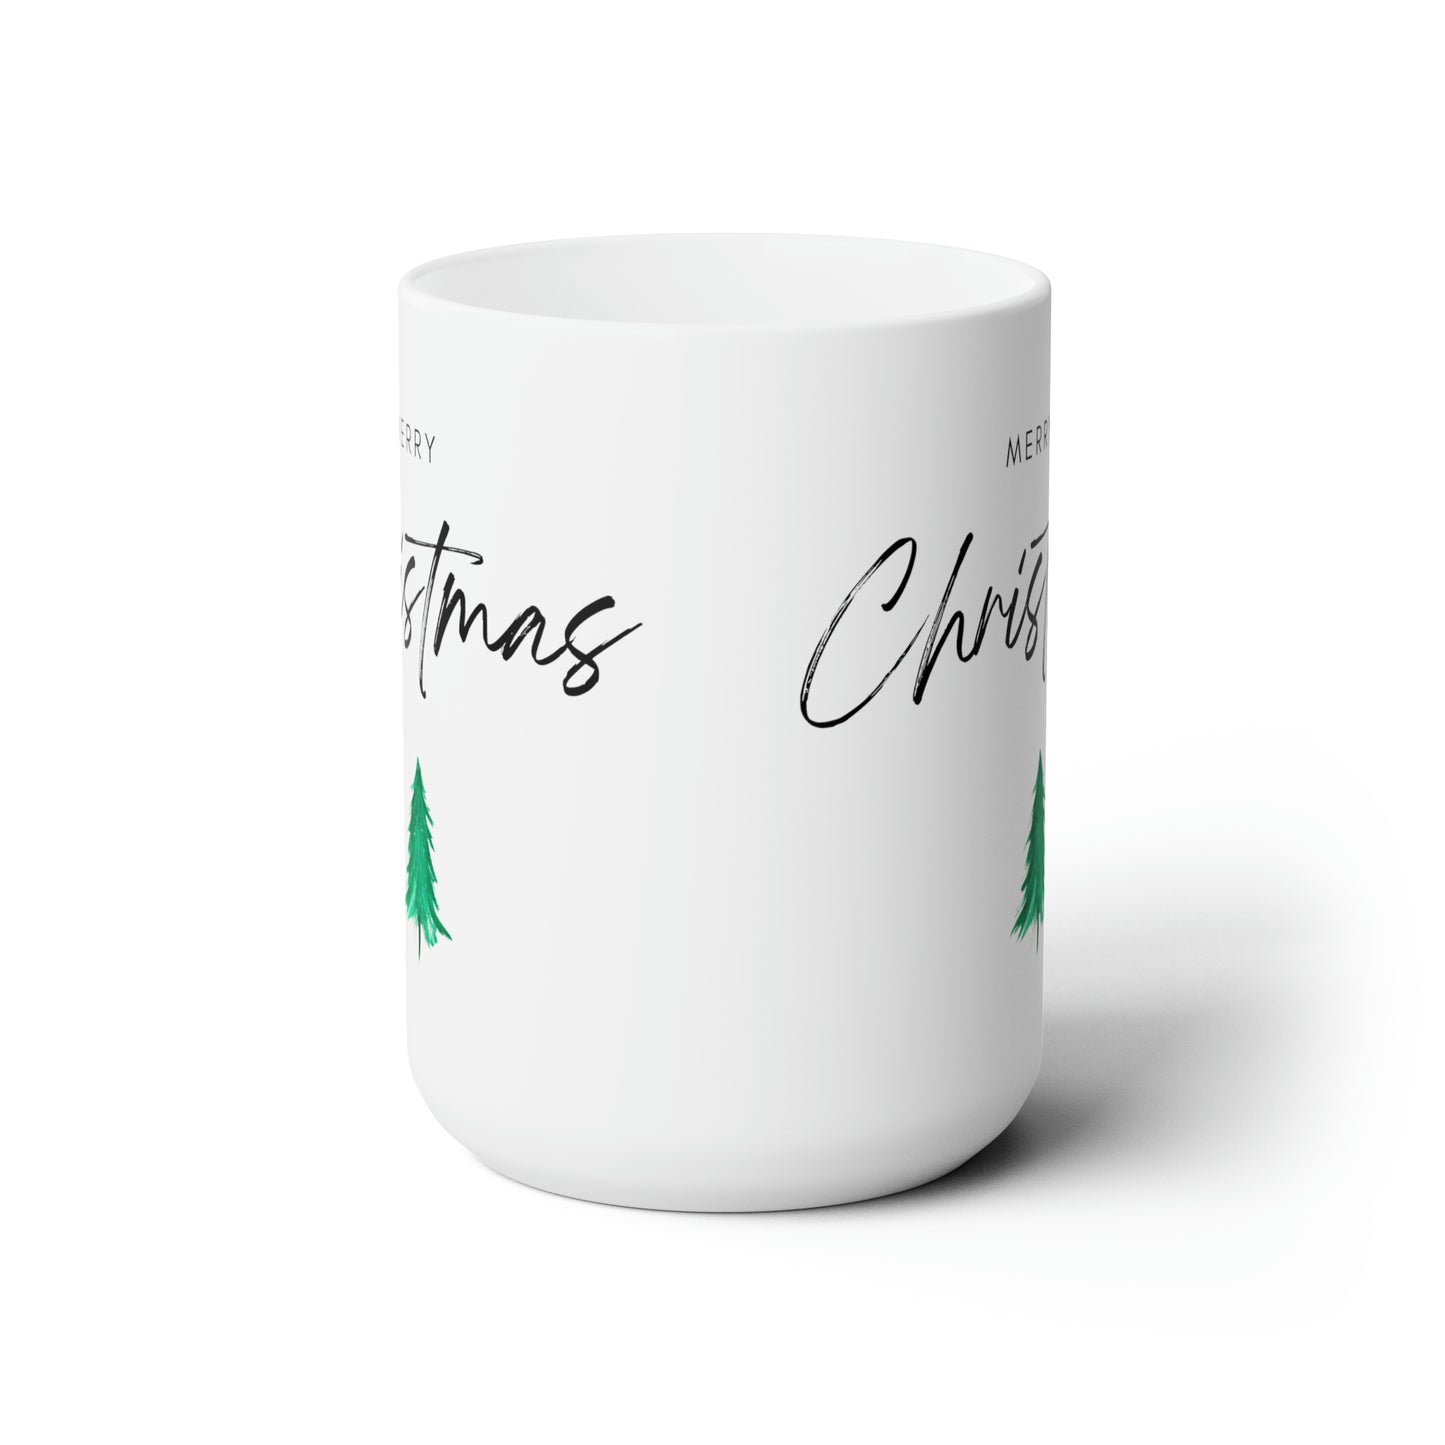 Merry Christmas Green Tree Printed Ceramic Mugs, 15oz